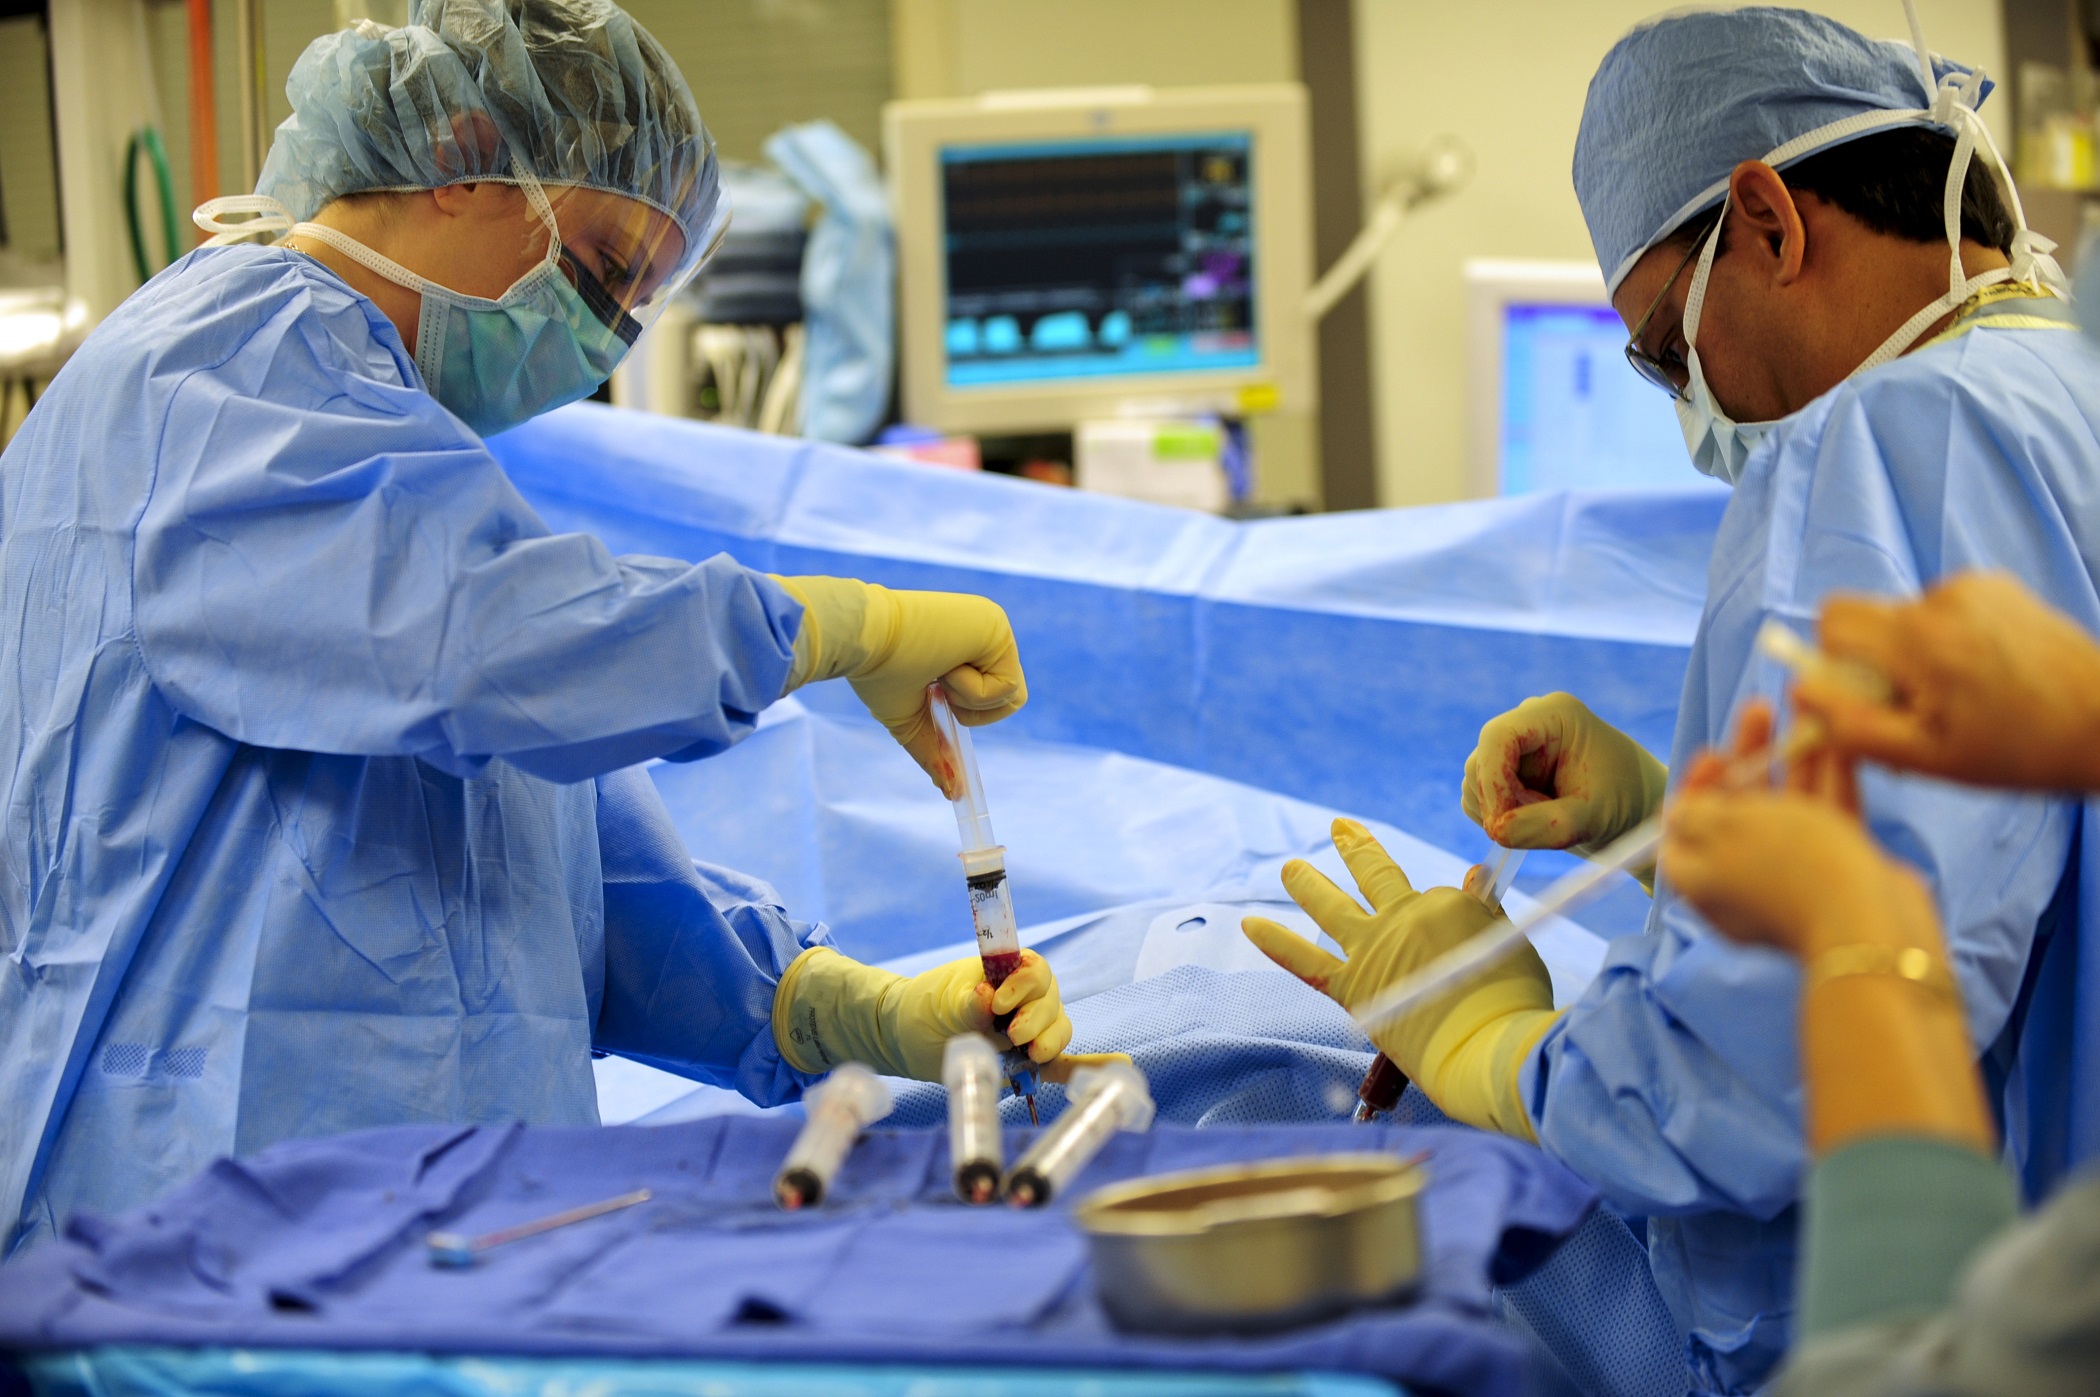 Best Bone Marrow Transplant Hospitals in India